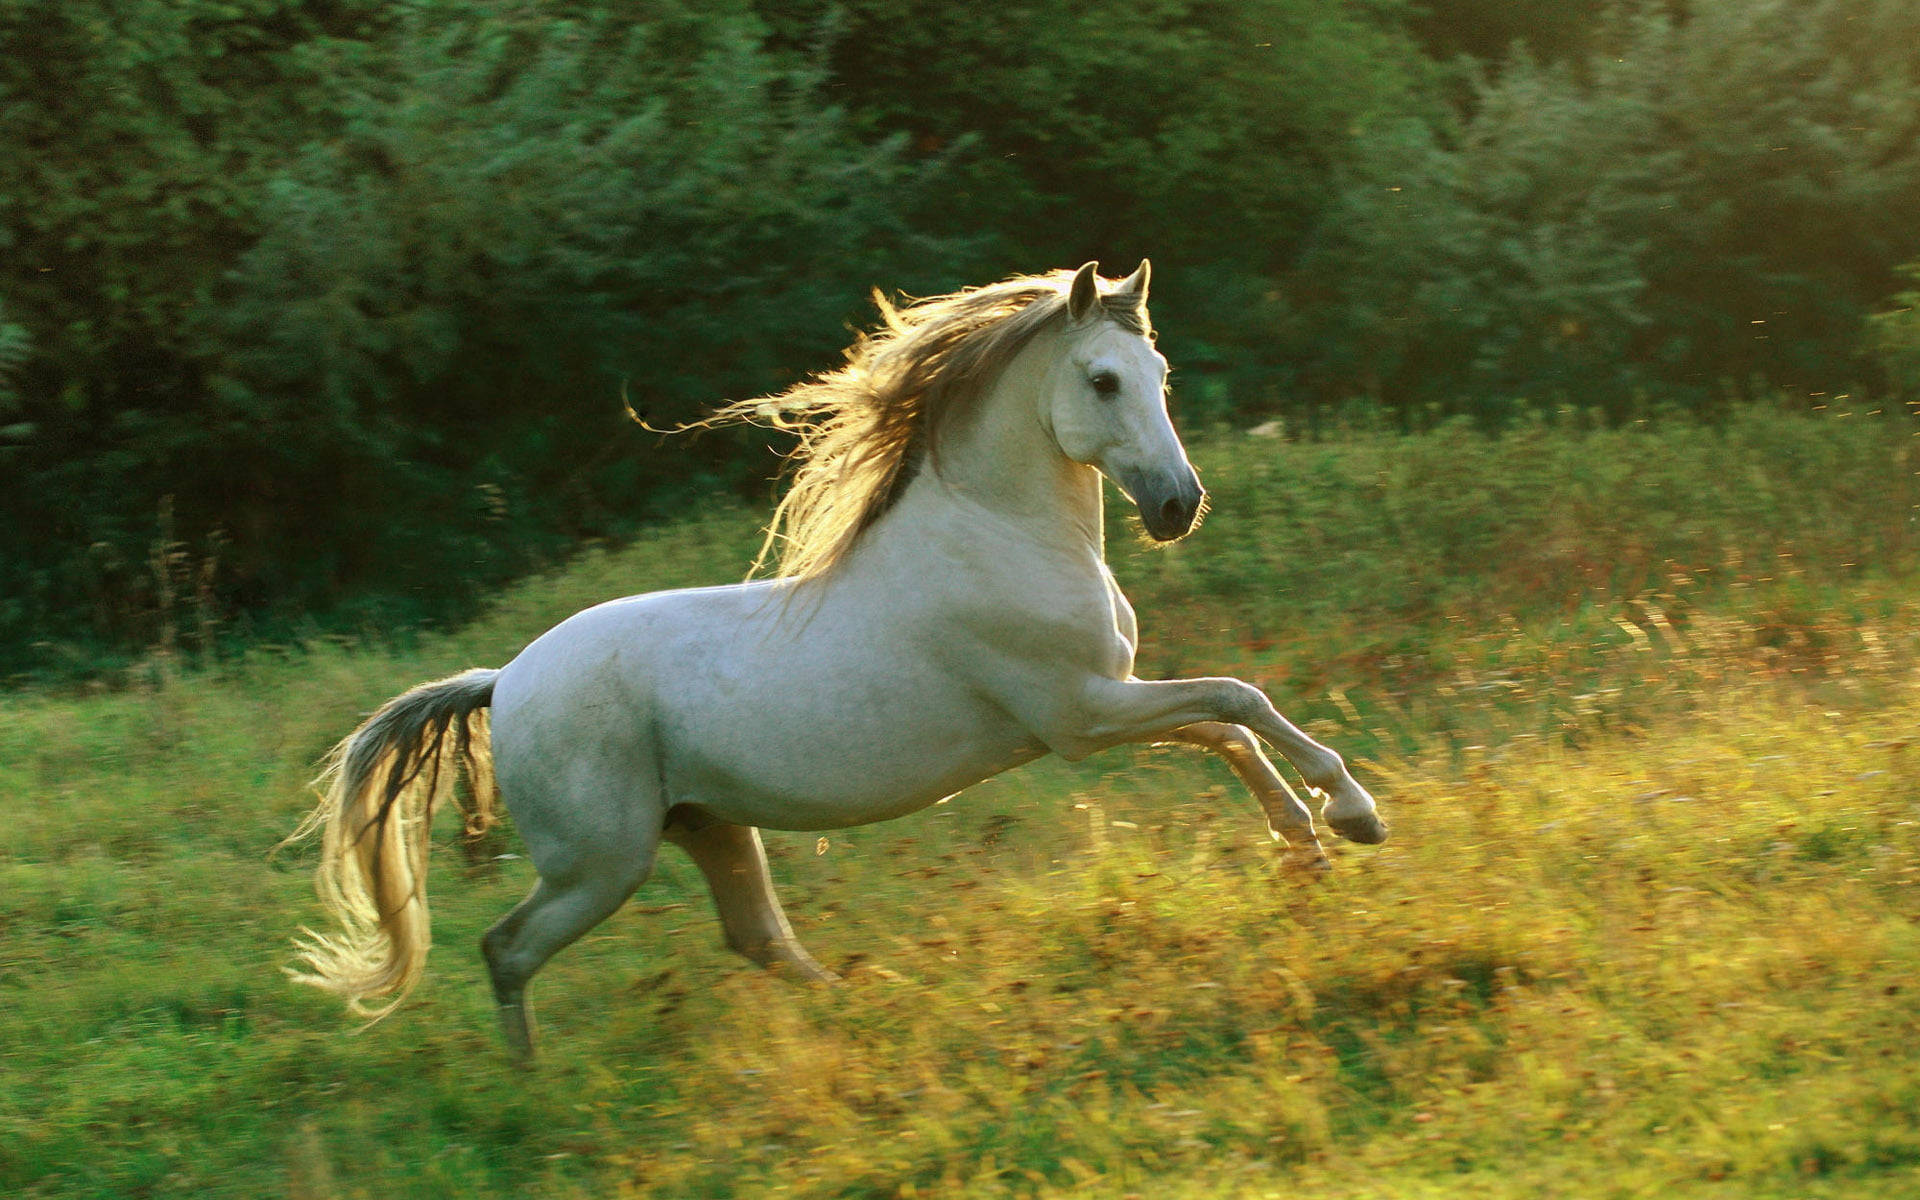 White Running Horse On Grassy Field